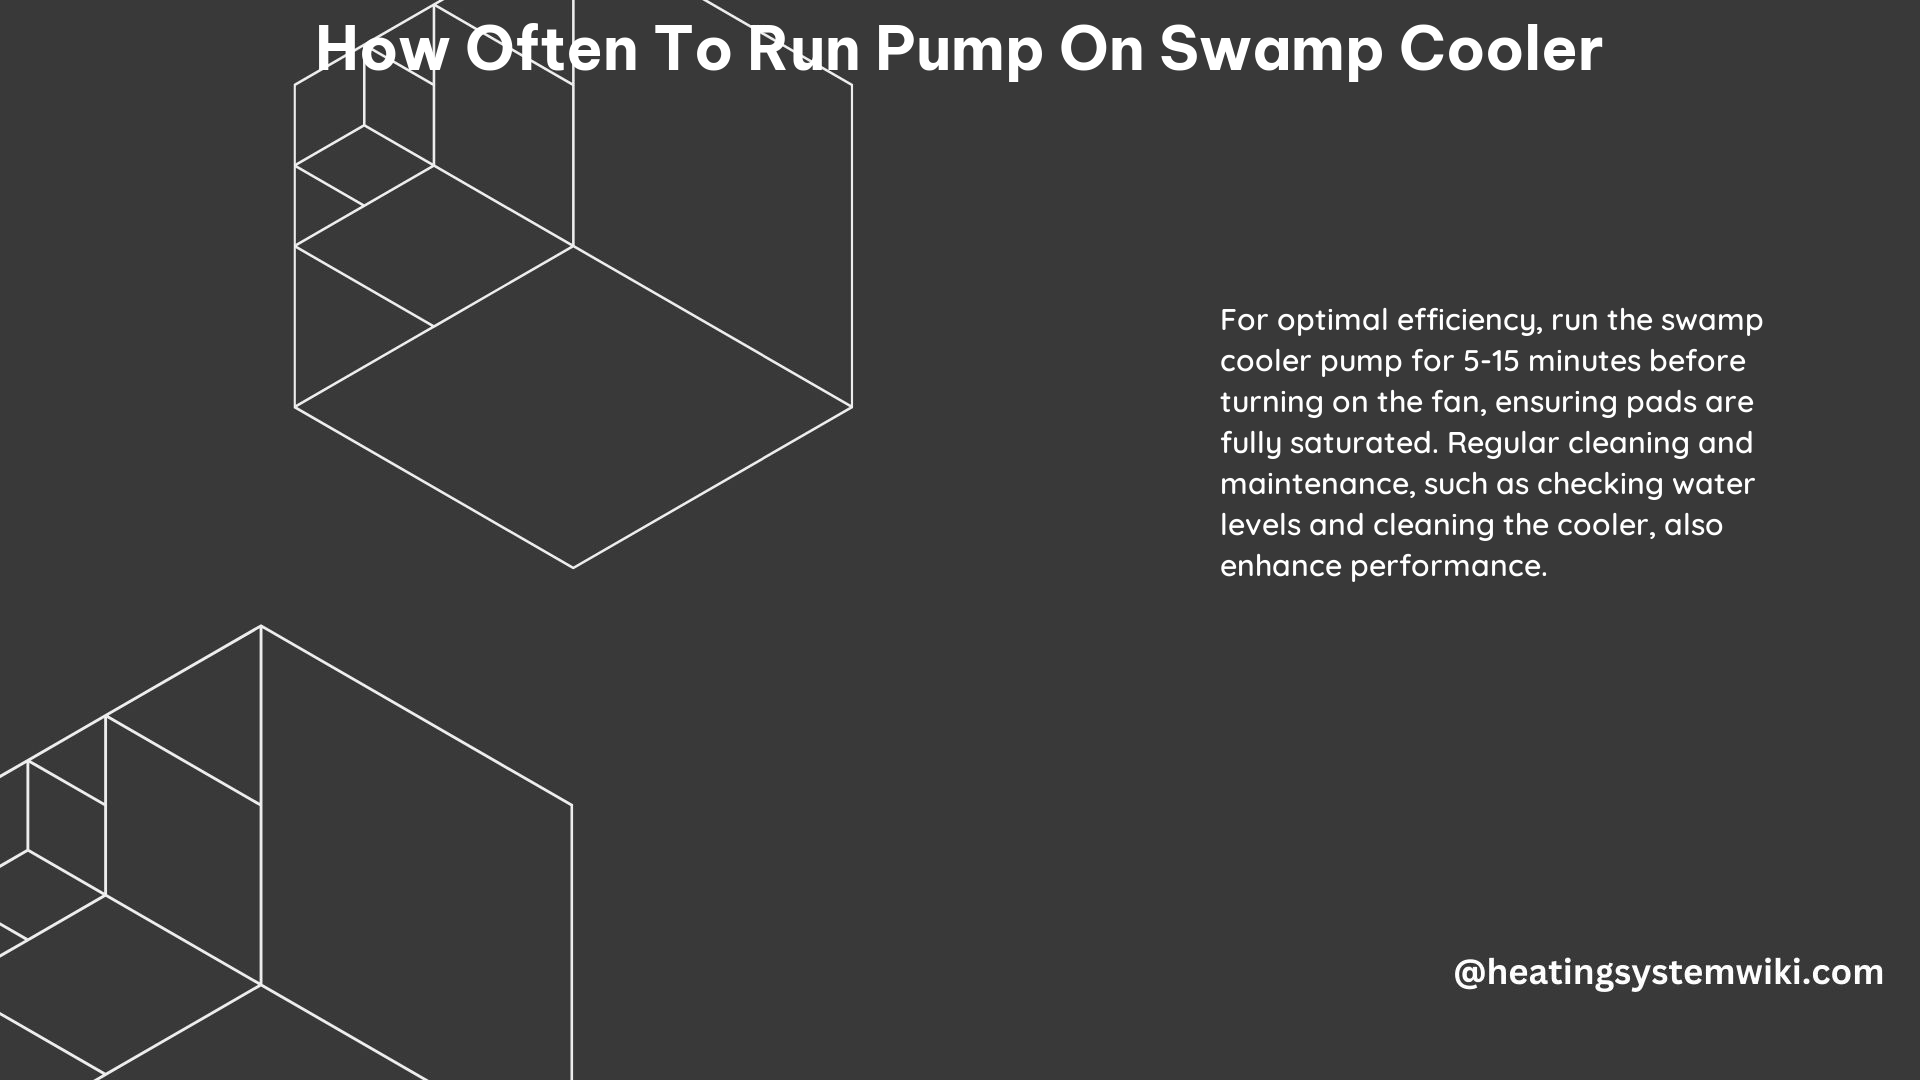 How Often to Run Pump on Swamp Cooler